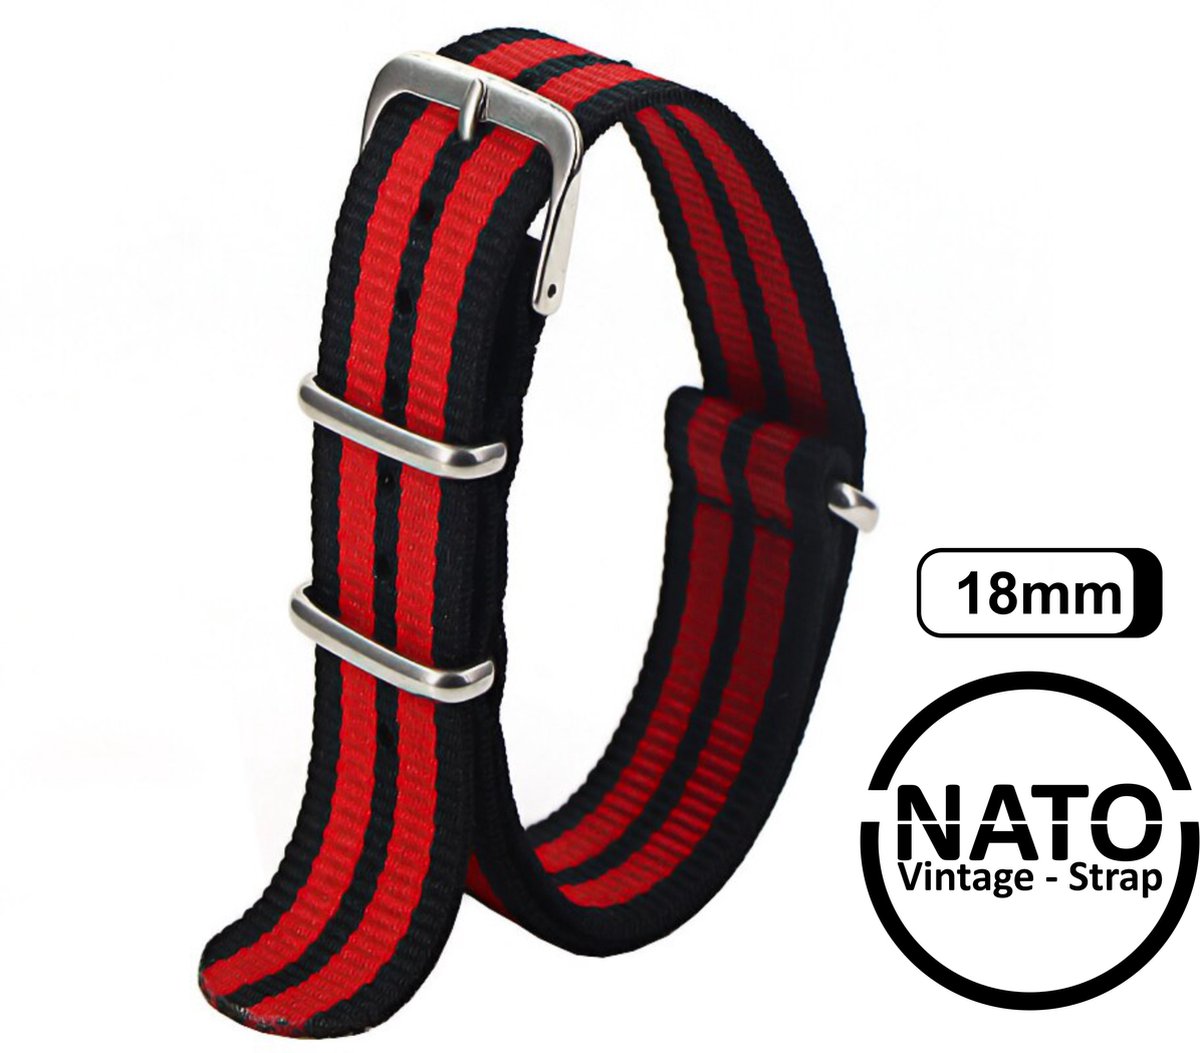 18mm Nato Strap Zwart Rood Gestreept - Vintage James Bond - Nato Strap collectie - Mannen - Horlogebanden - 18 mm bandbreedte voor oa. Seiko Rolex Omega Casio en Citizen